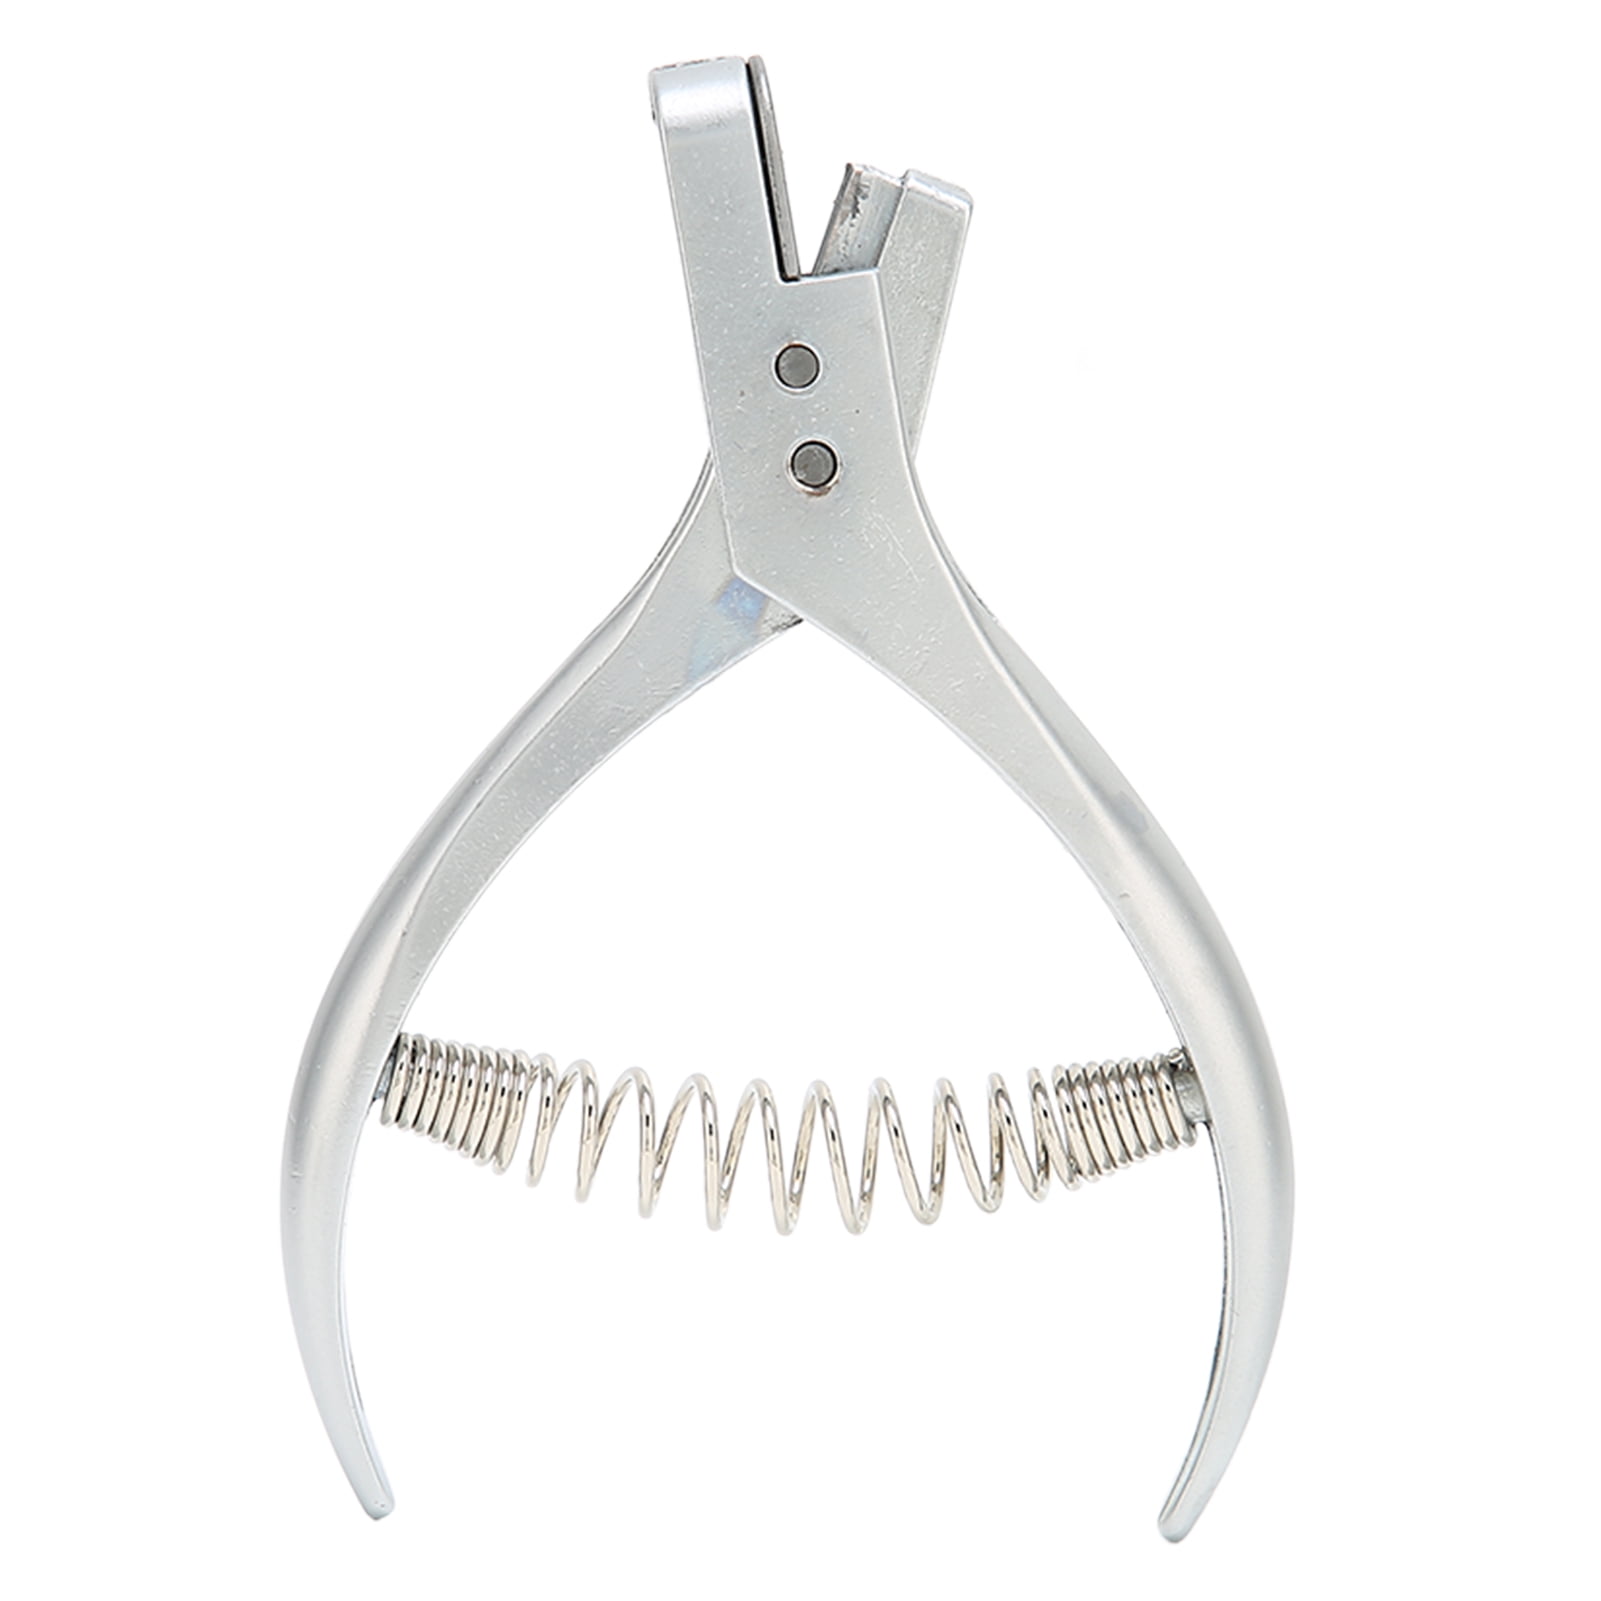 3 Type 6 Size Multi function Revolving Leather Belt Punch Plier Add Eyelets  Perforator Tool Make Hole Puncher Watchband 1 pcs (6 Round Holes)